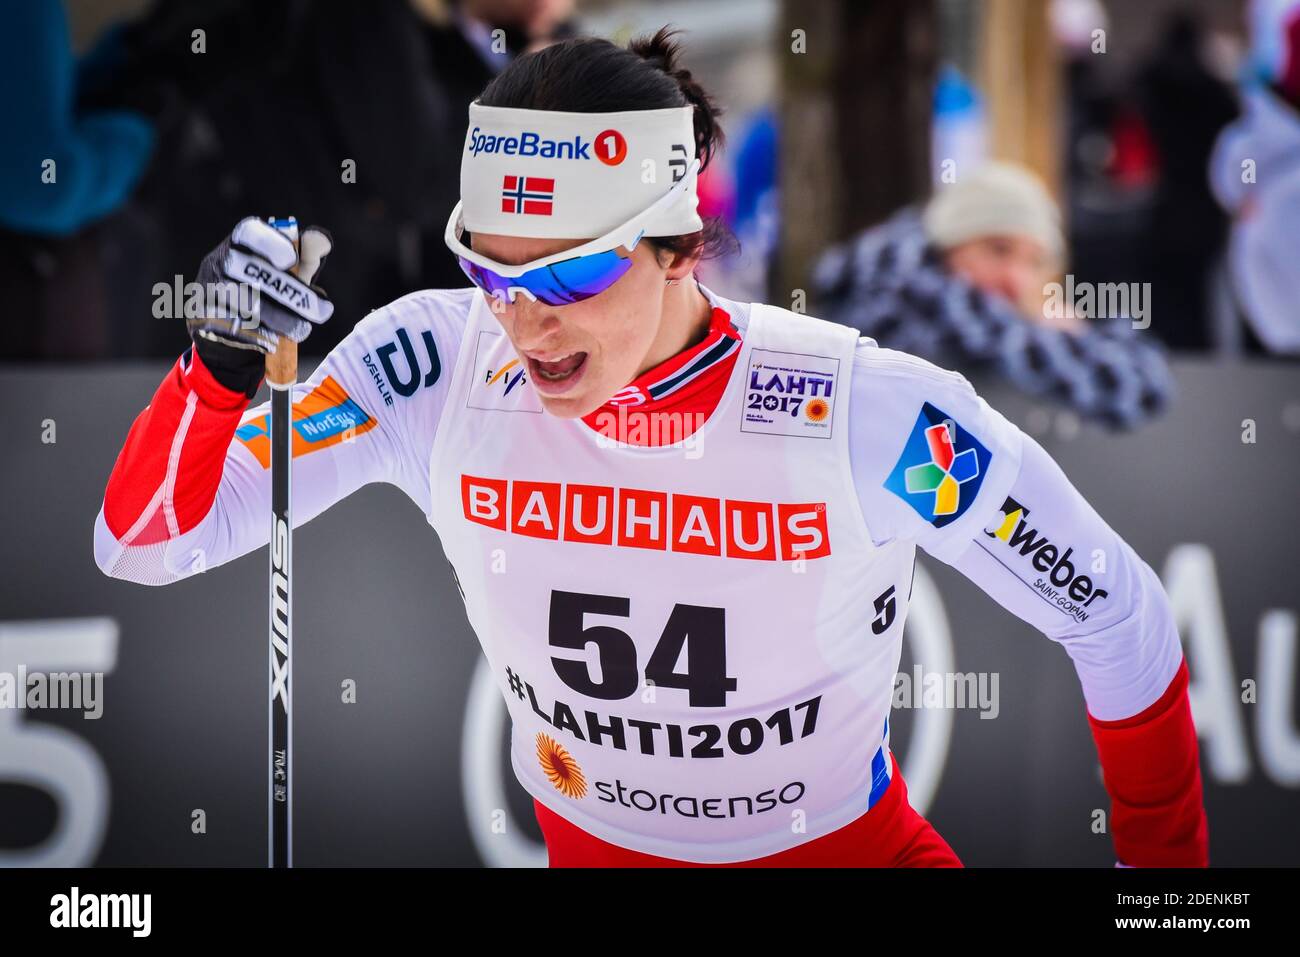 Marit Bjørgen (Bjorgen, Bjoergen), Norwegian Women's Ski Team, in 10-K classic at the 2017 FIS World Nordic Ski Championships in Lahti, Finland. Stock Photo